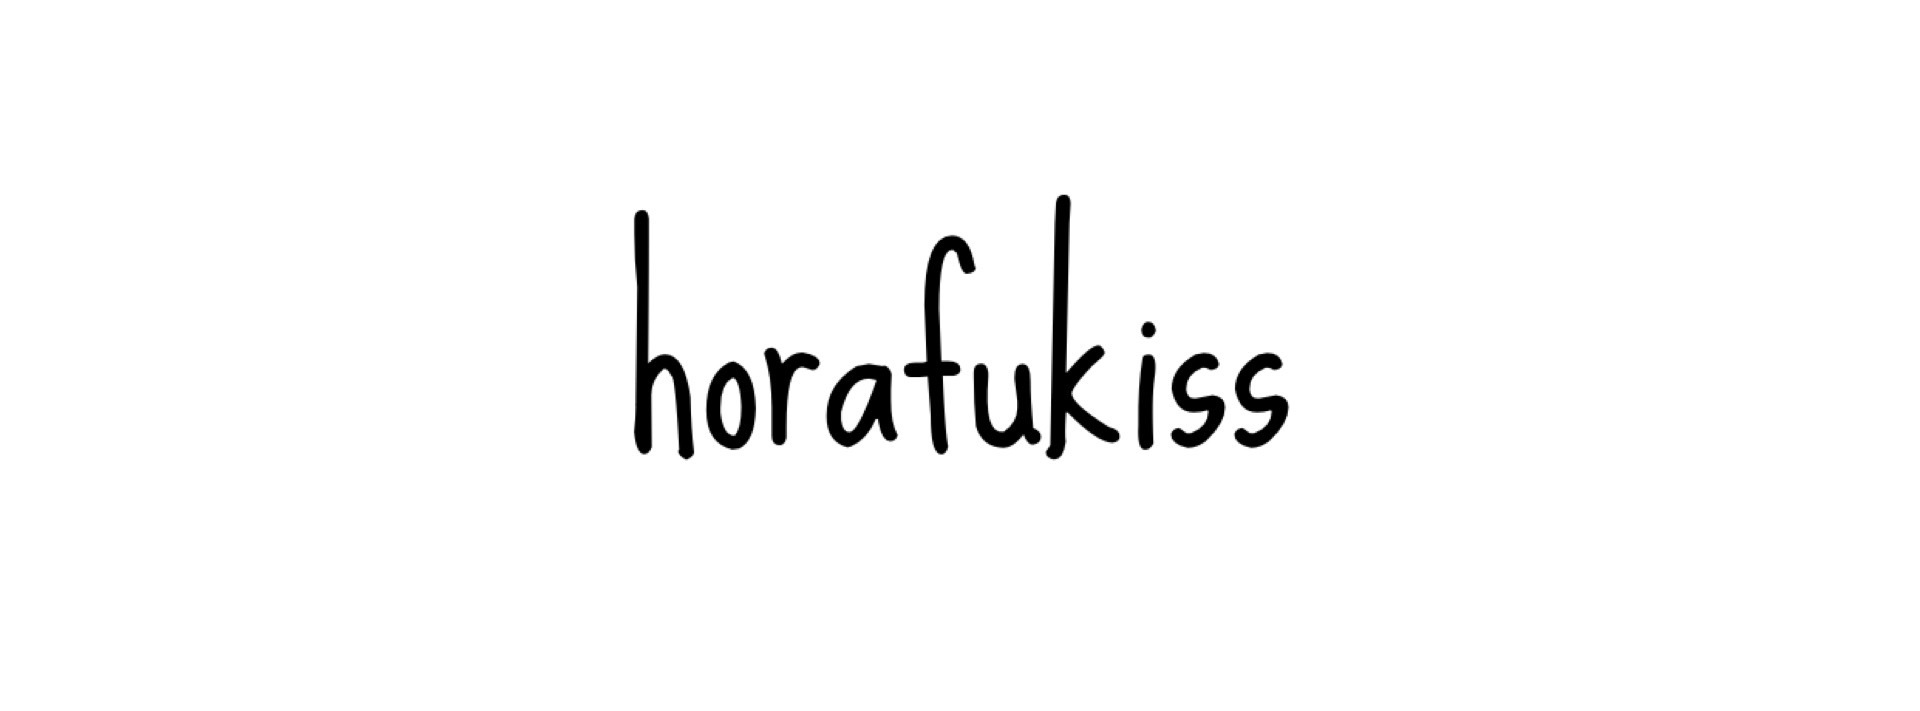 horafukiss